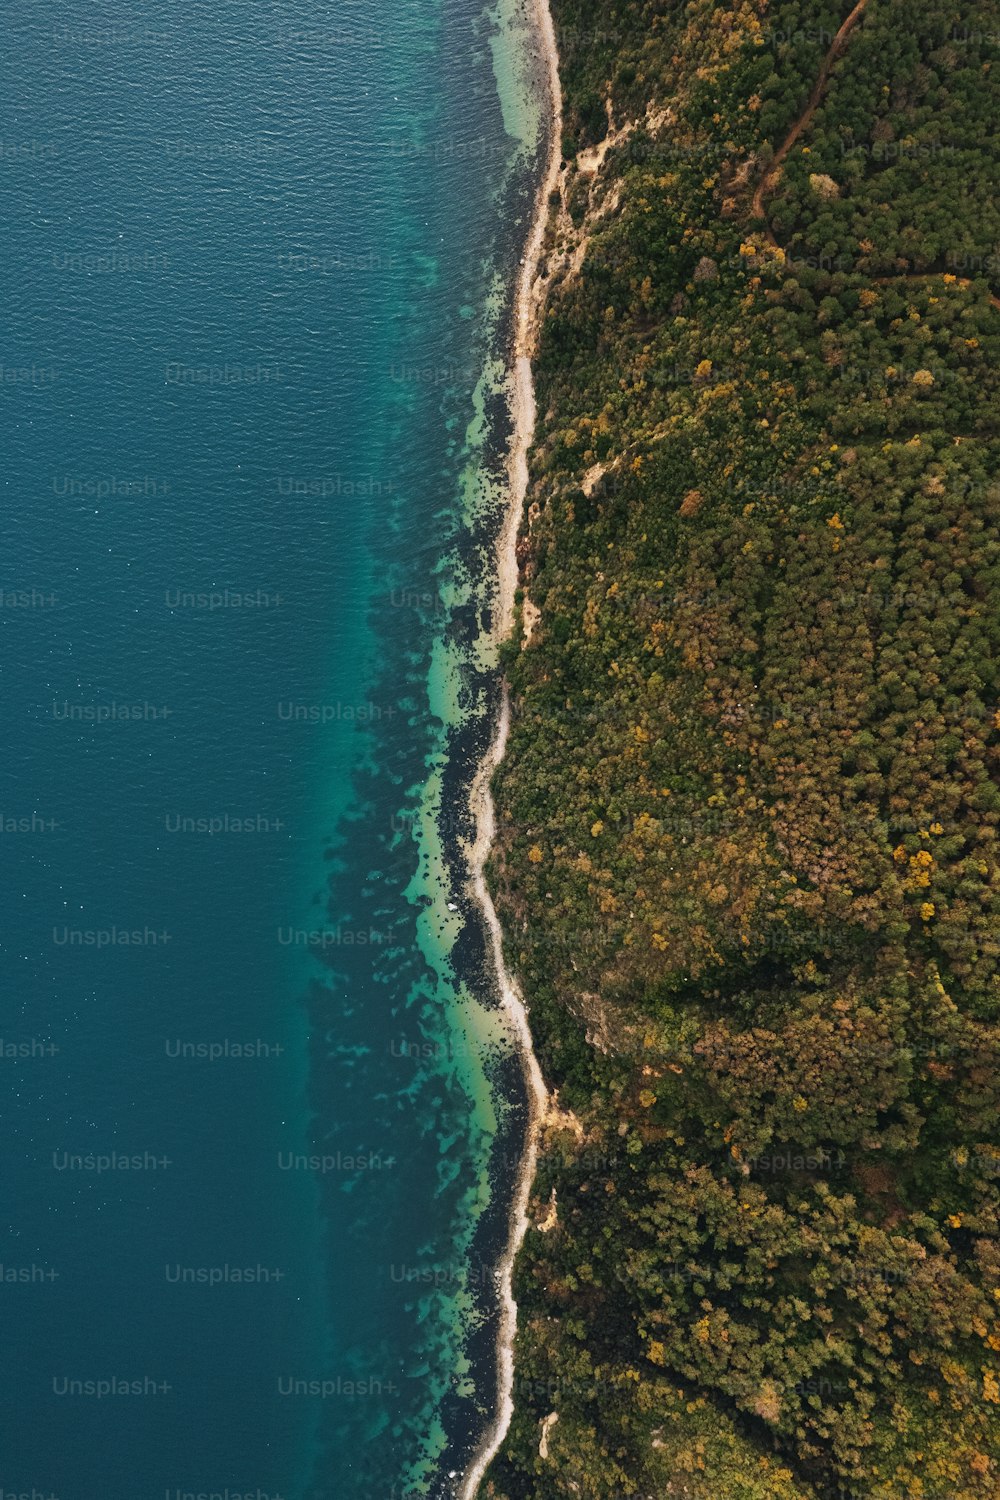 an aerial view of a body of water near a beach